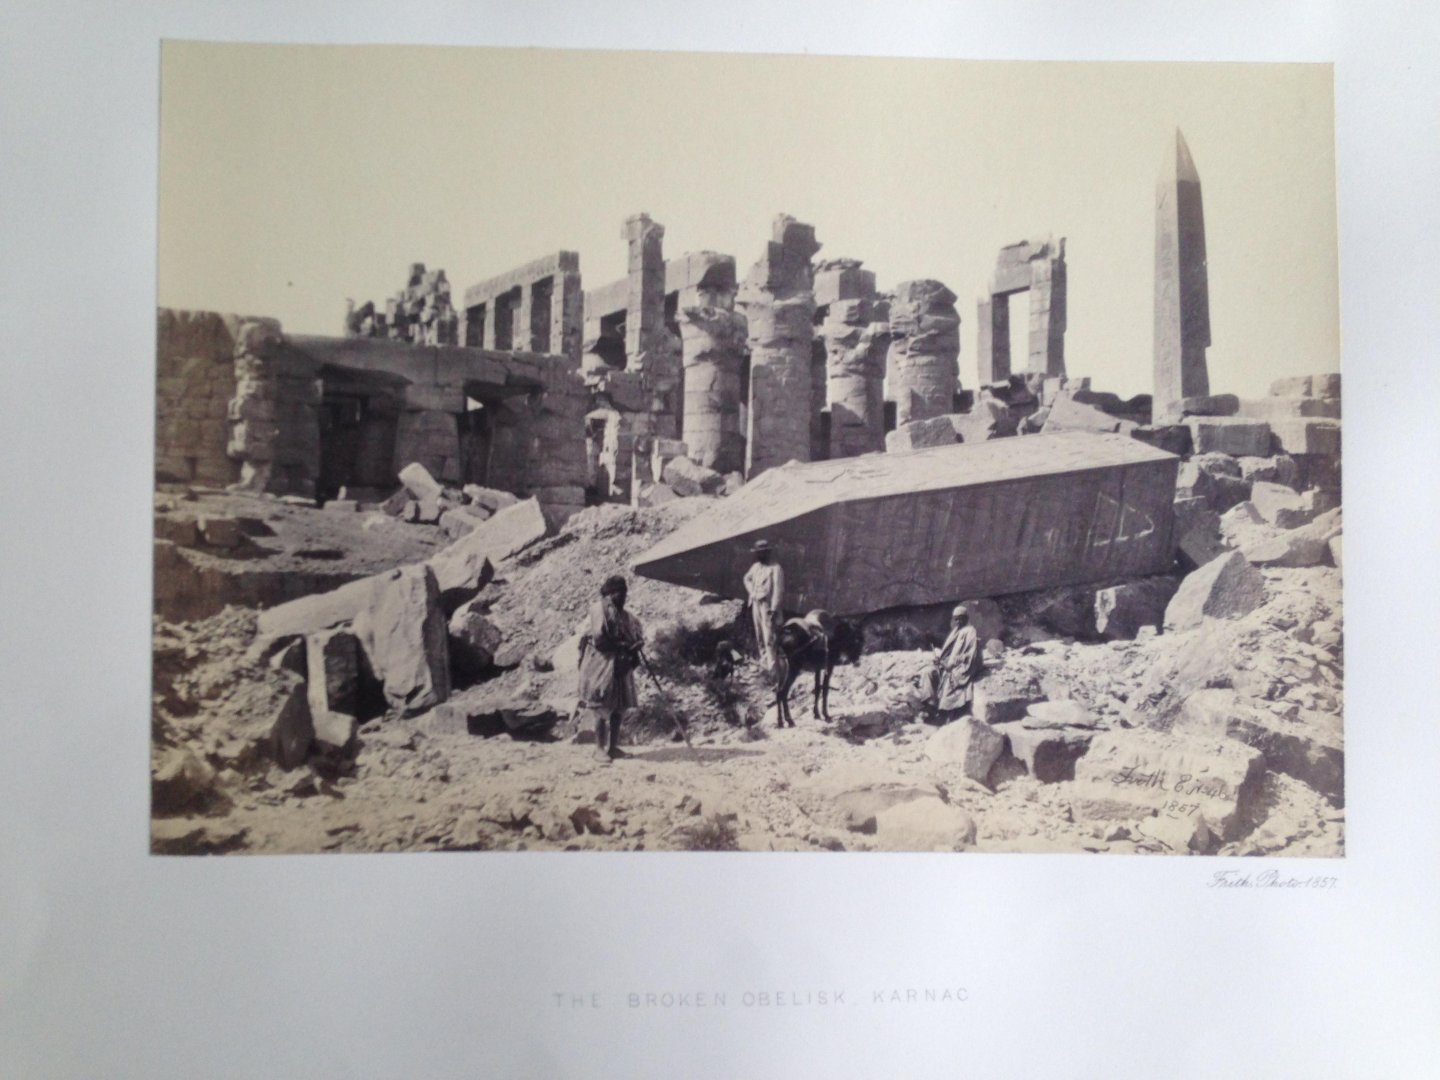 Frith, Francis - The Broken Obelisk, Karnac, Series Egypt and Palestine